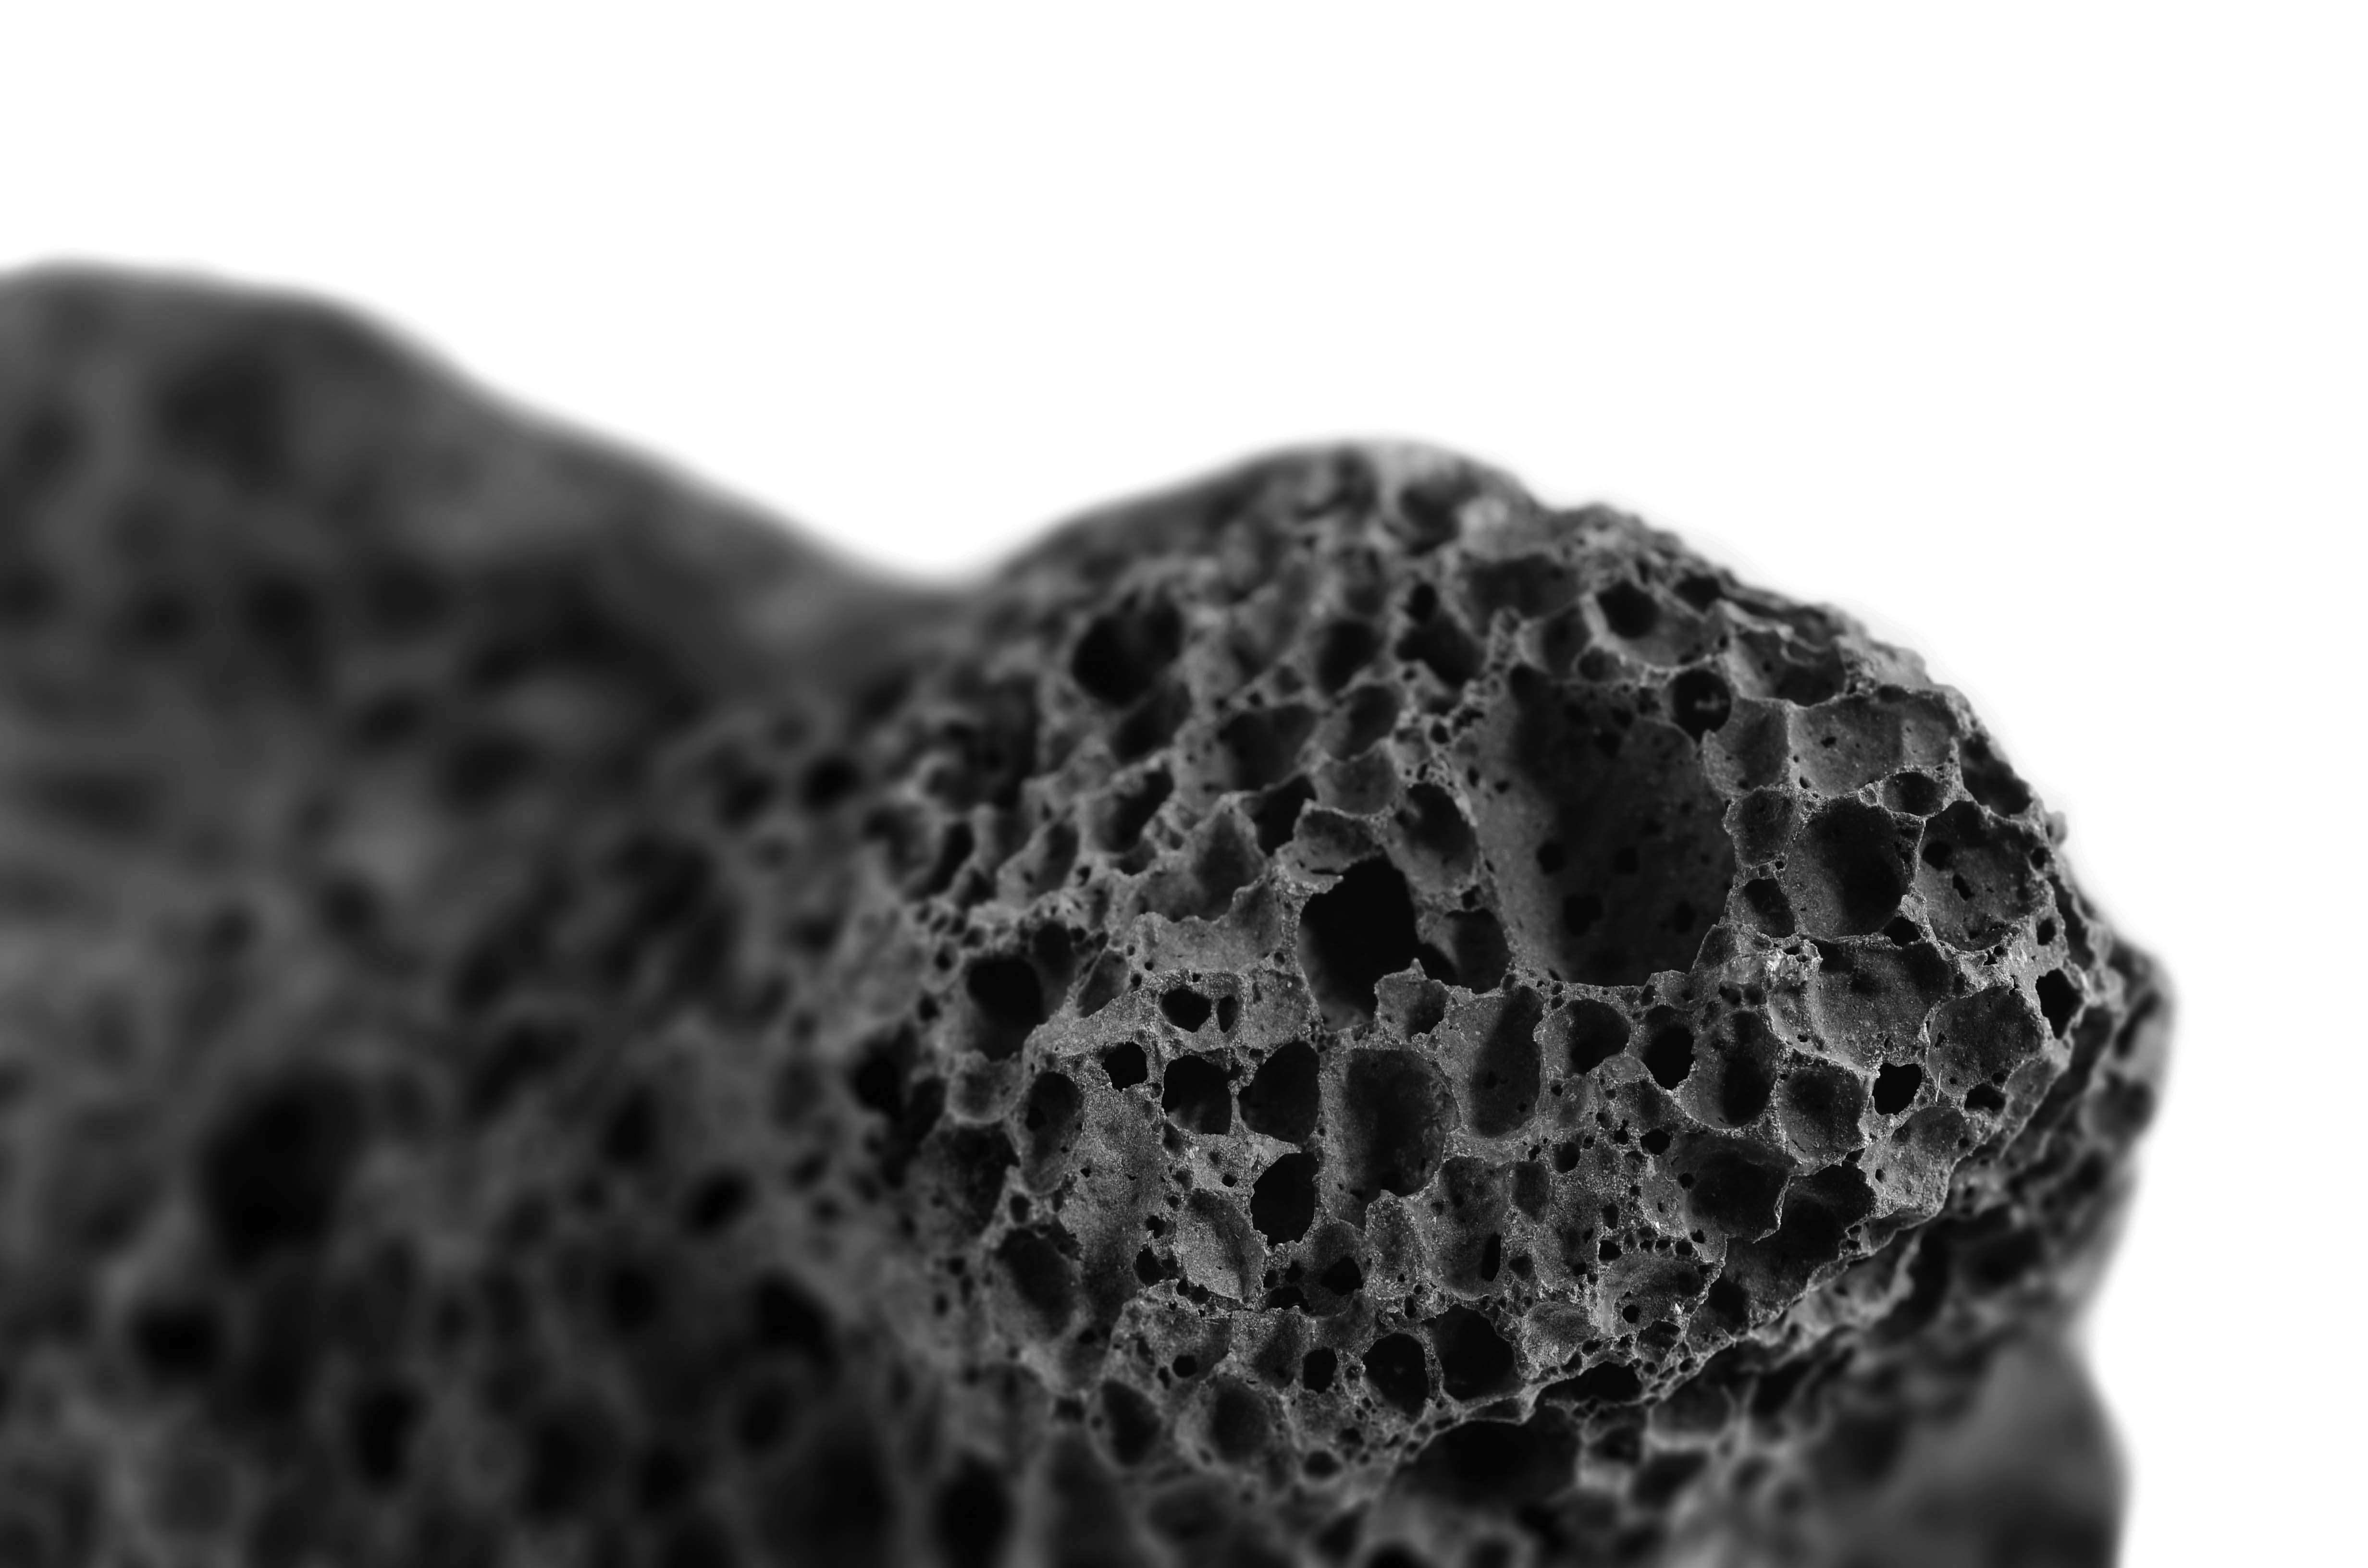 Black porous lava stone